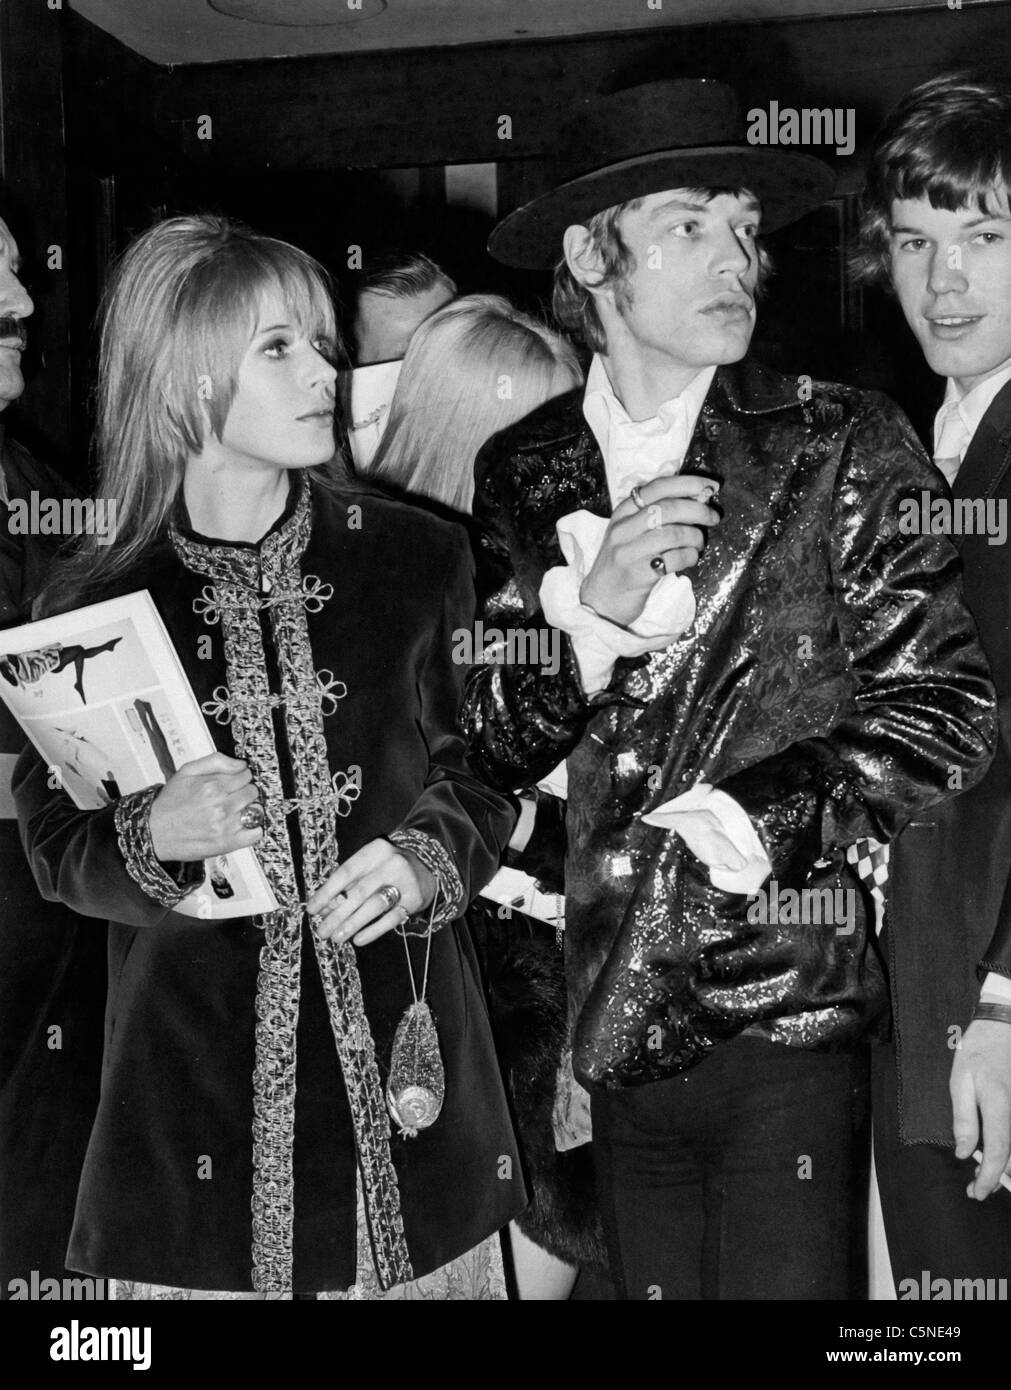 Mick Jagger, Marianne fidato, 1967 Foto Stock